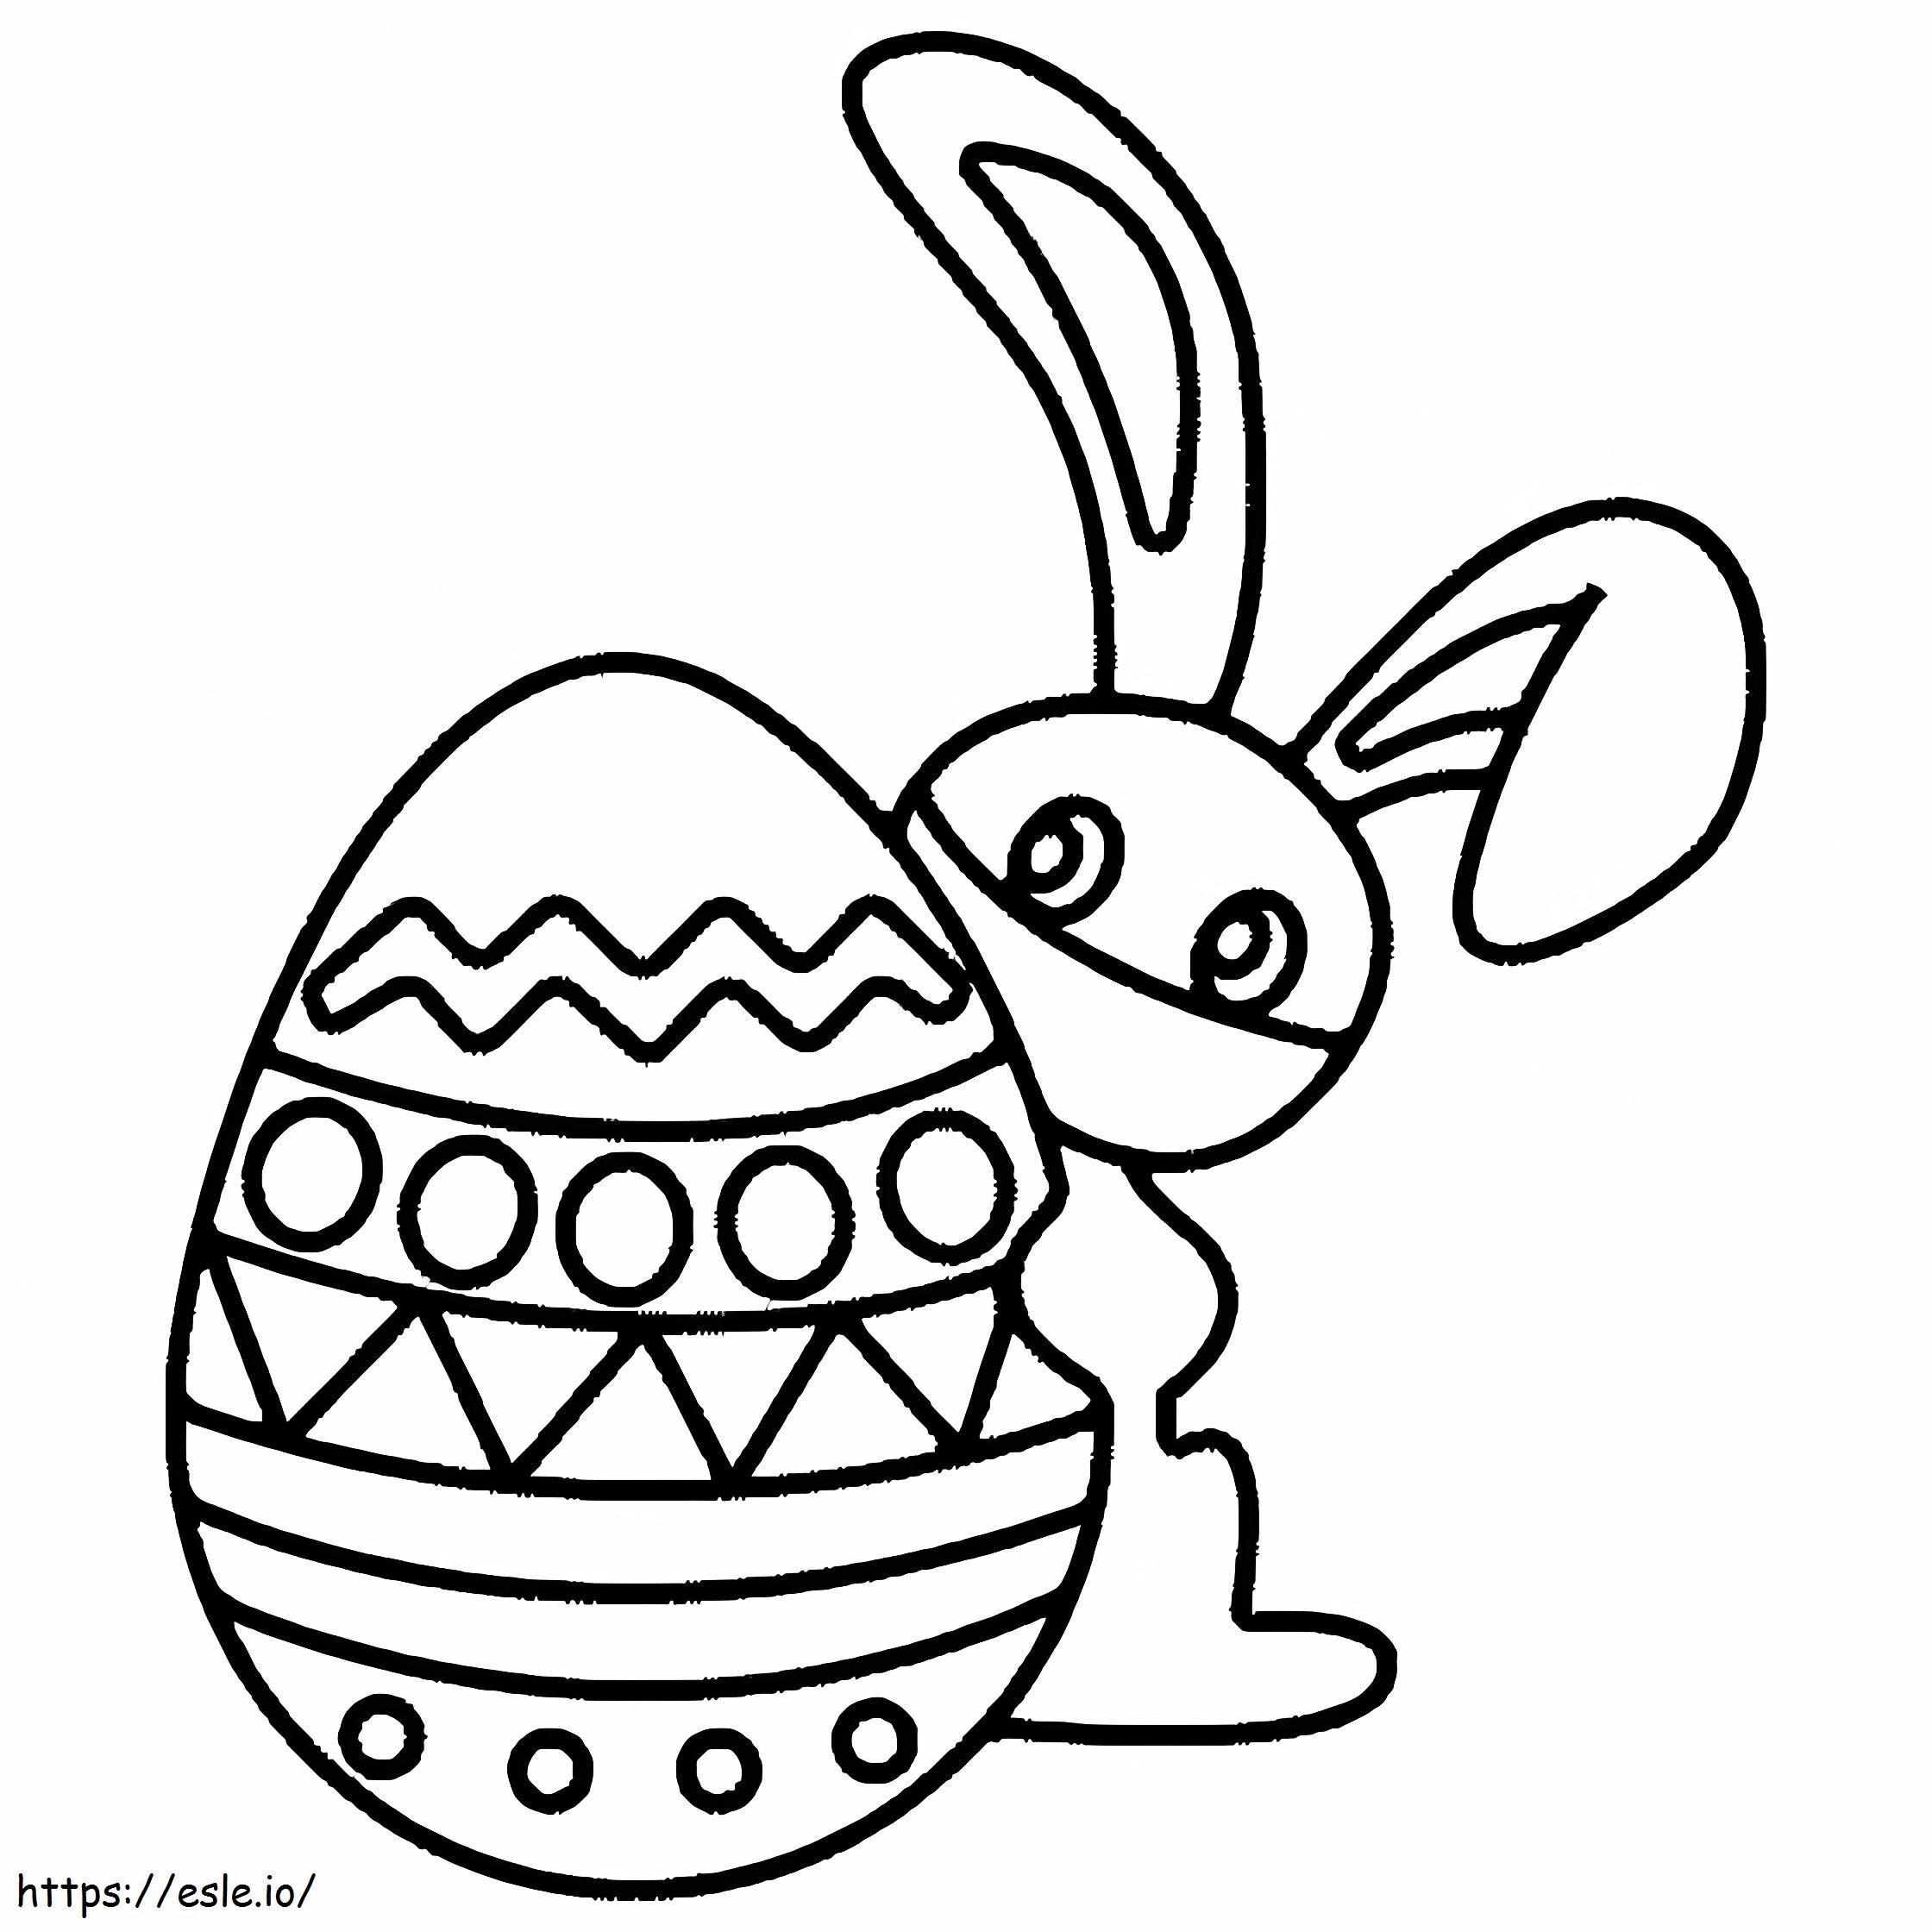 Dibujo de conejito con huevo de Pascua para colorear